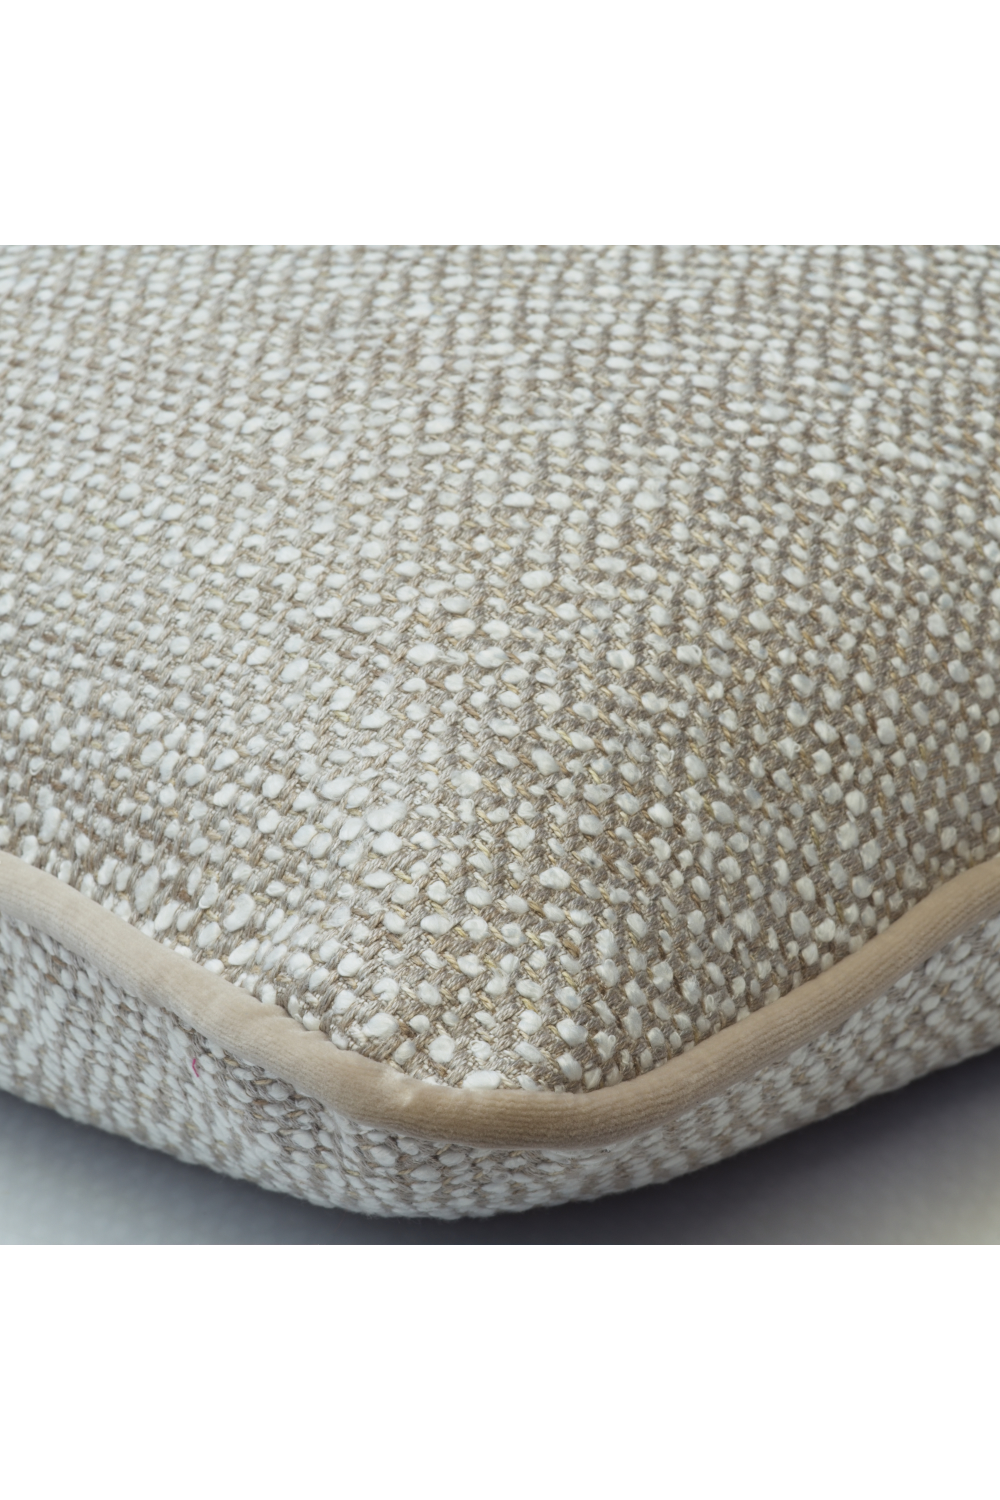 Minimalist Textured Cushion | Andrew Martin Knot | Oroa.com